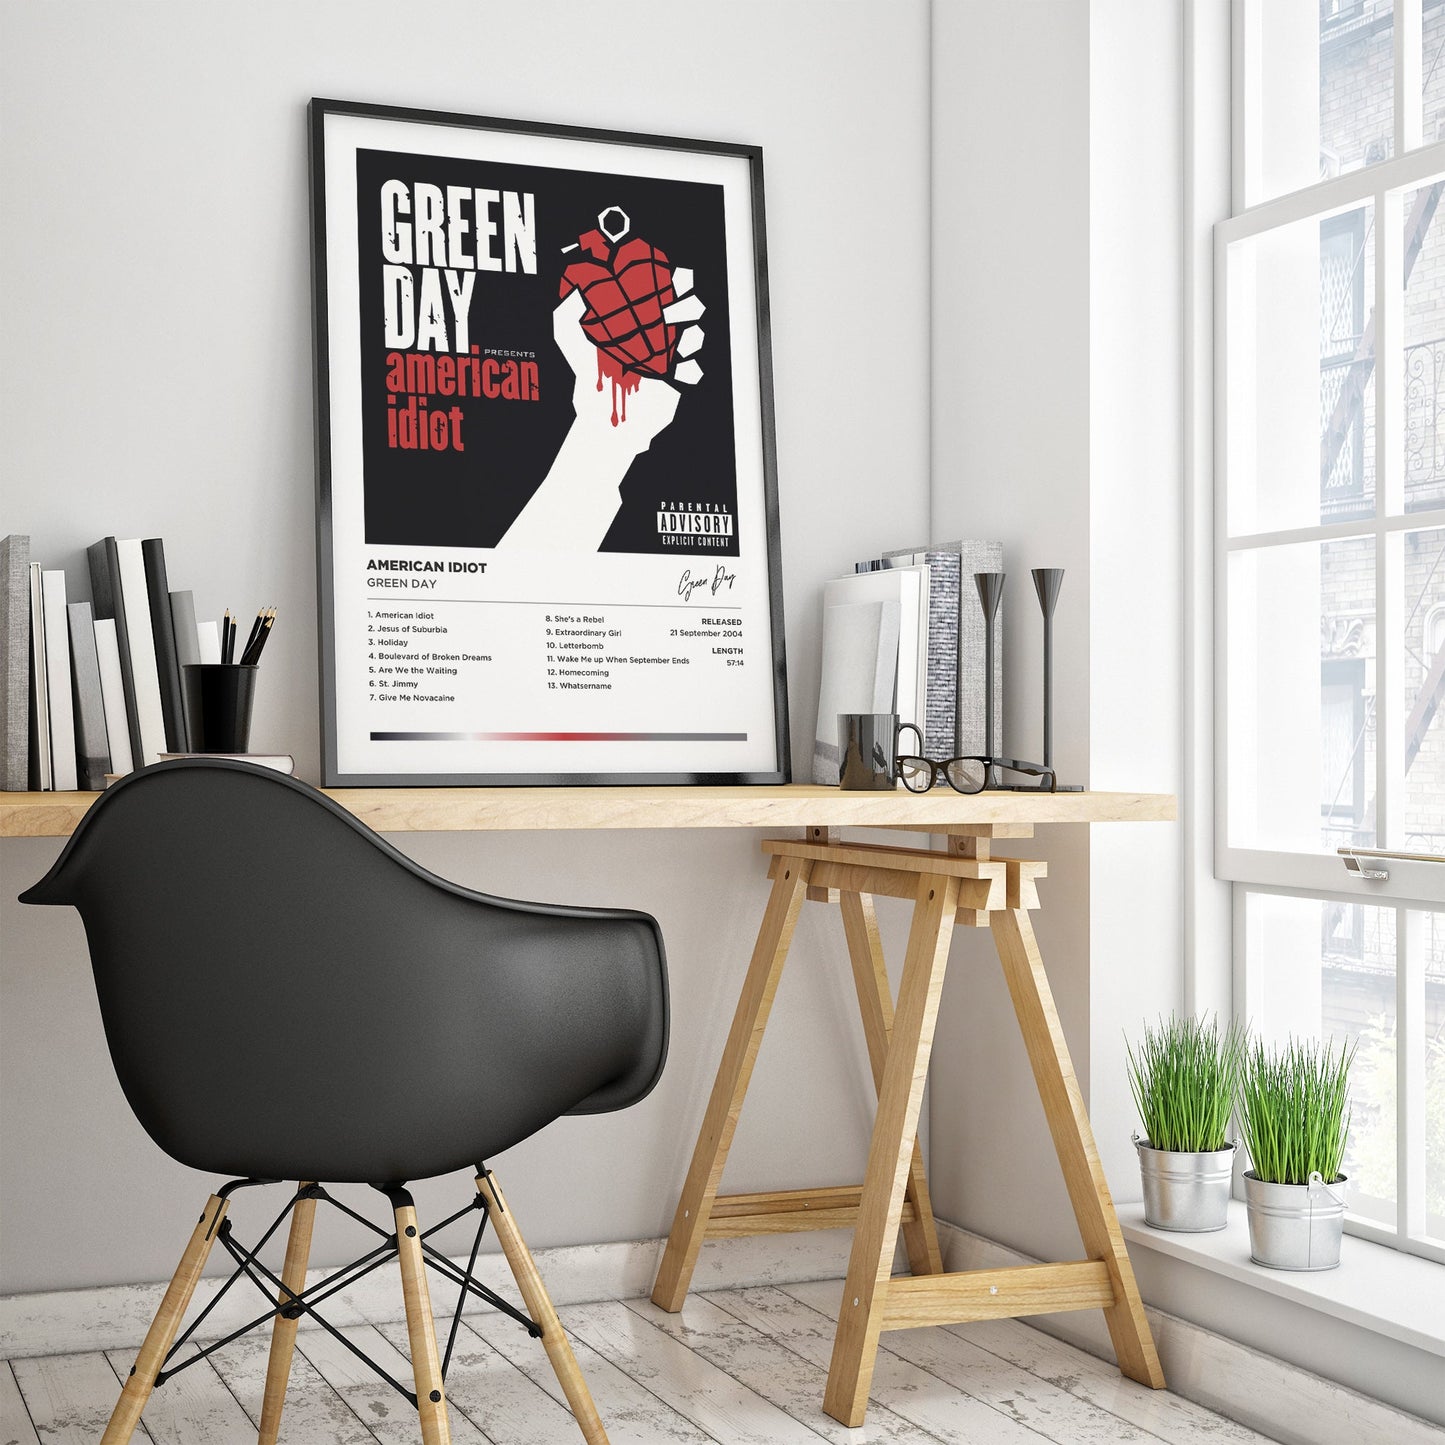 Green Day - American Idiot Framed Poster Print | Polaroid Style | Album Cover Artwork